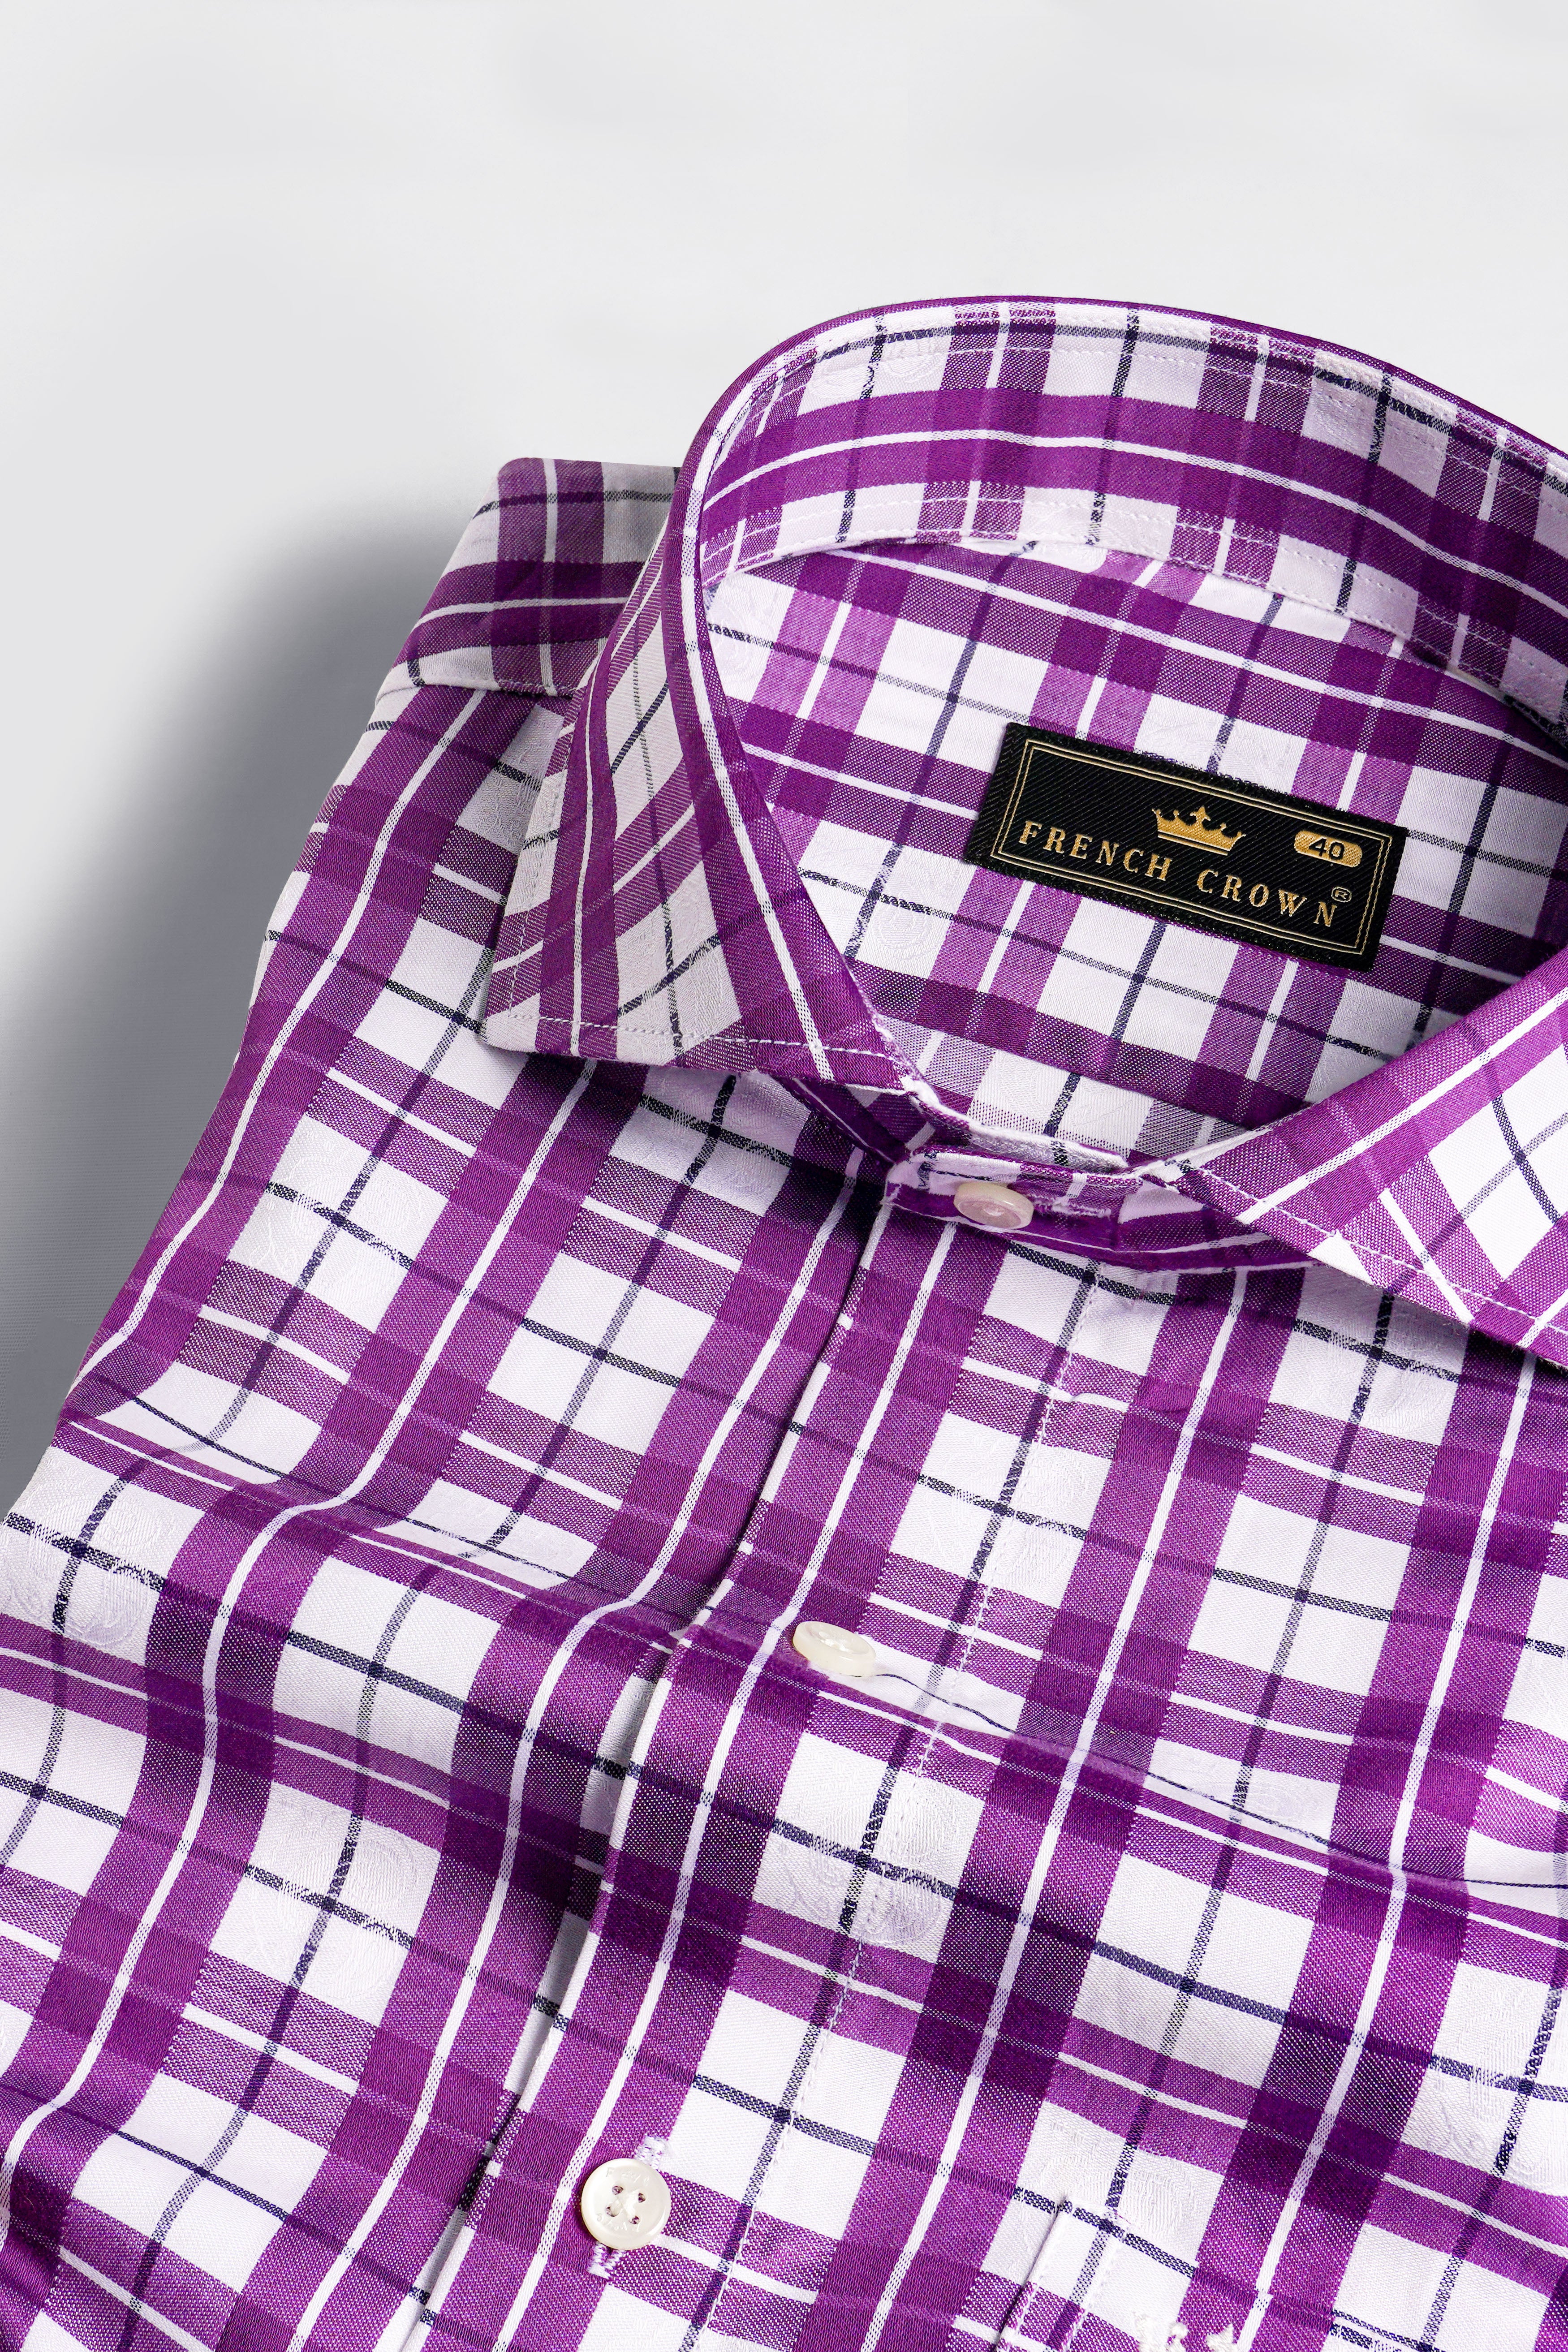 Bright White with Byzantium Purple Checkered Jacquard Textured Premium Giza Cotton Shirt